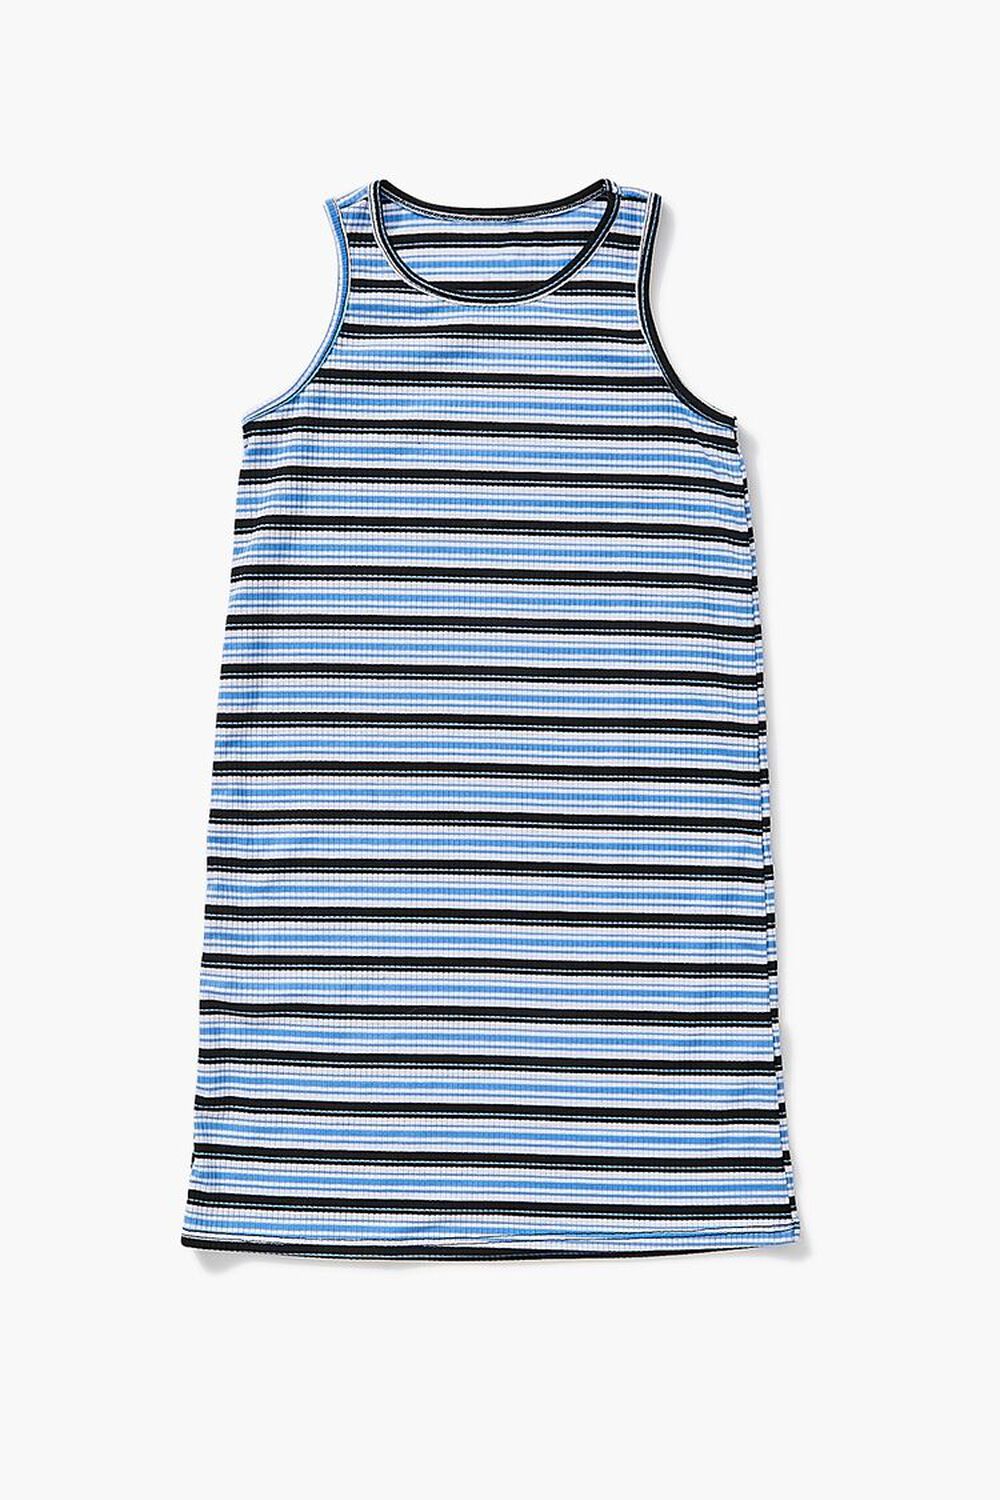 BLUE/MULTI Girls Striped Tank Dress (Kids), image 1